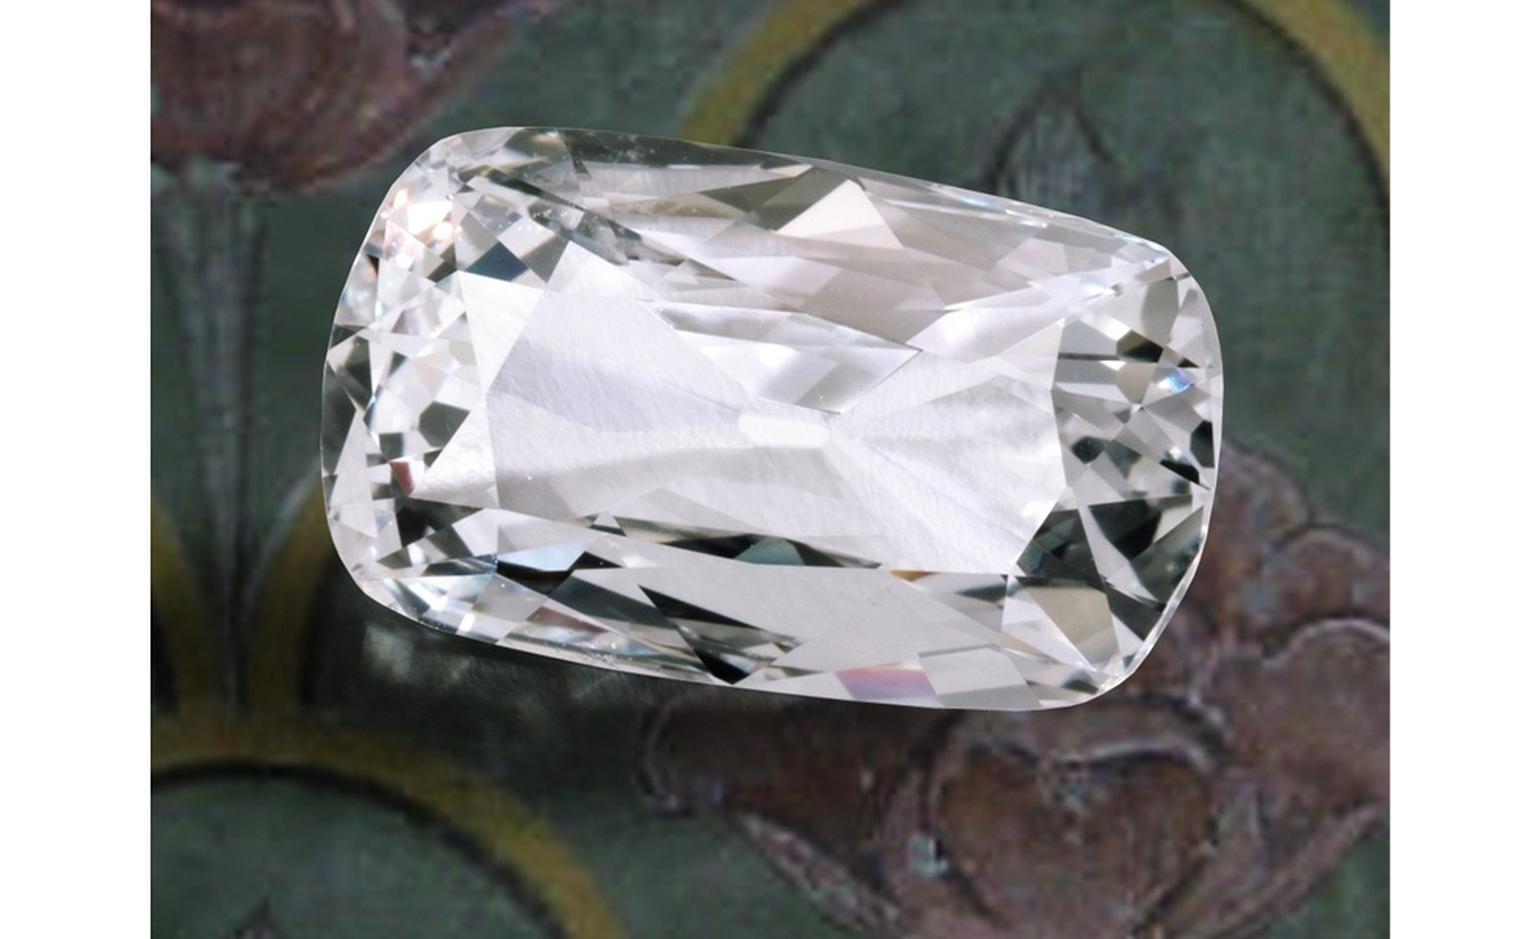 Lot 184 Platinum and ‘Golconda’ Diamond Ring Est. $600/800,000. SOLD FOR $752,500